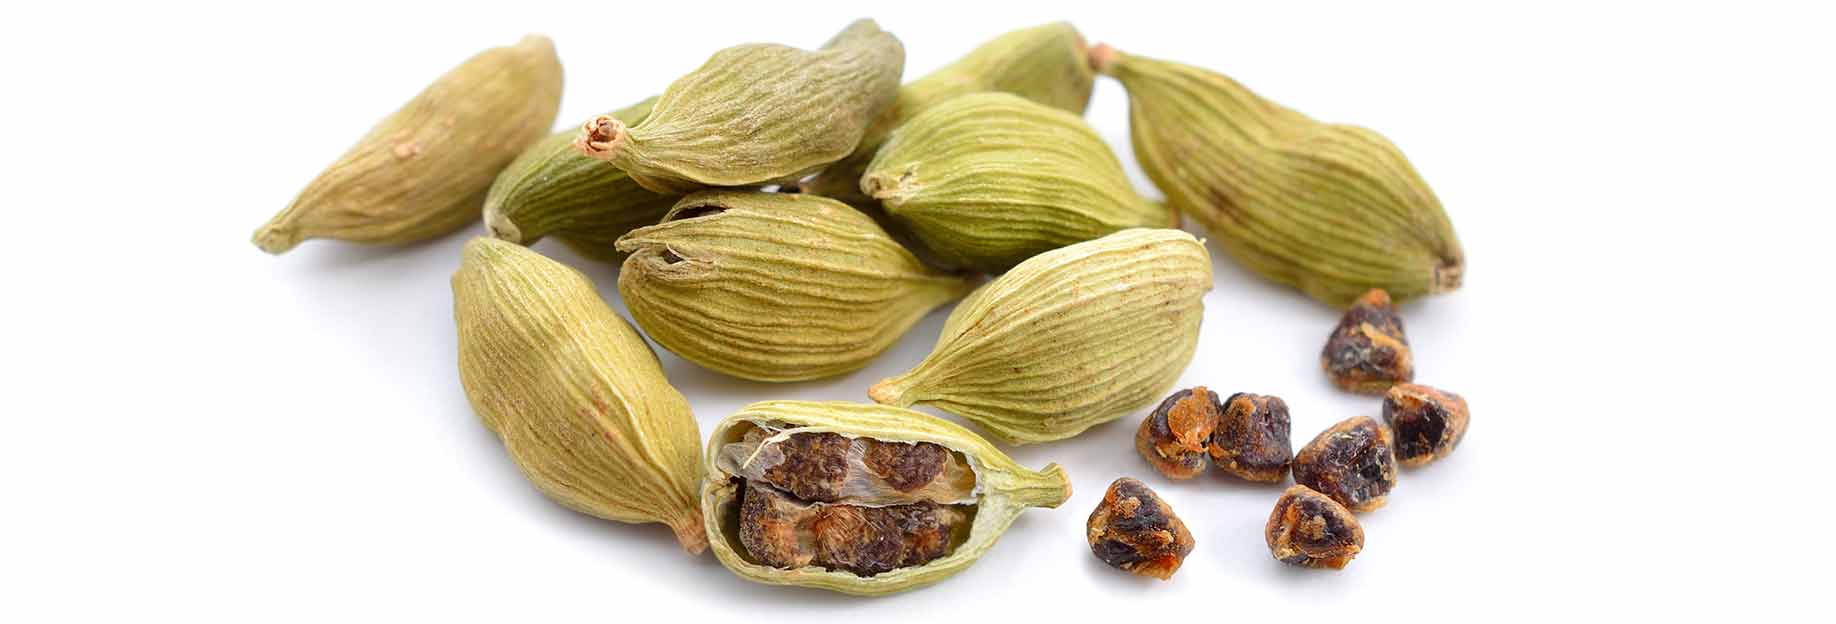 cardamom seeds for high blood pressure hypertension natural remedies herb